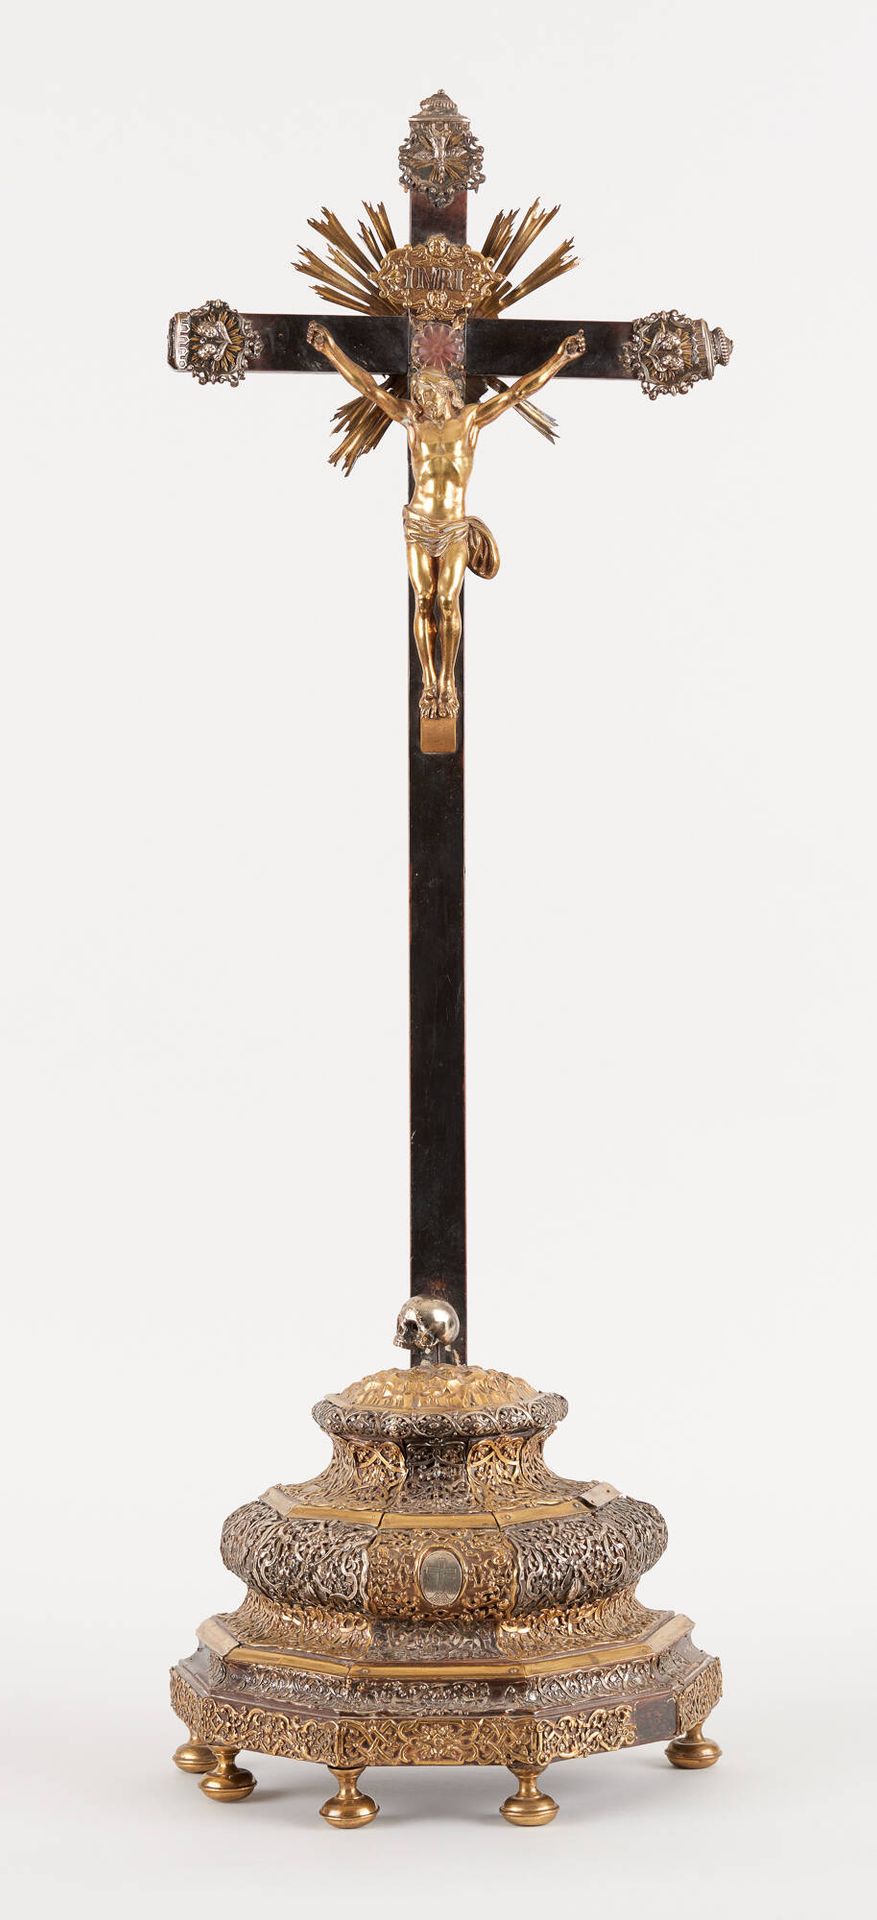 Circa 1800. 青铜雕塑：木质十字架上的基督，有银和铜的浮雕元素。
(缺失)。
尺寸：高：共87厘米。